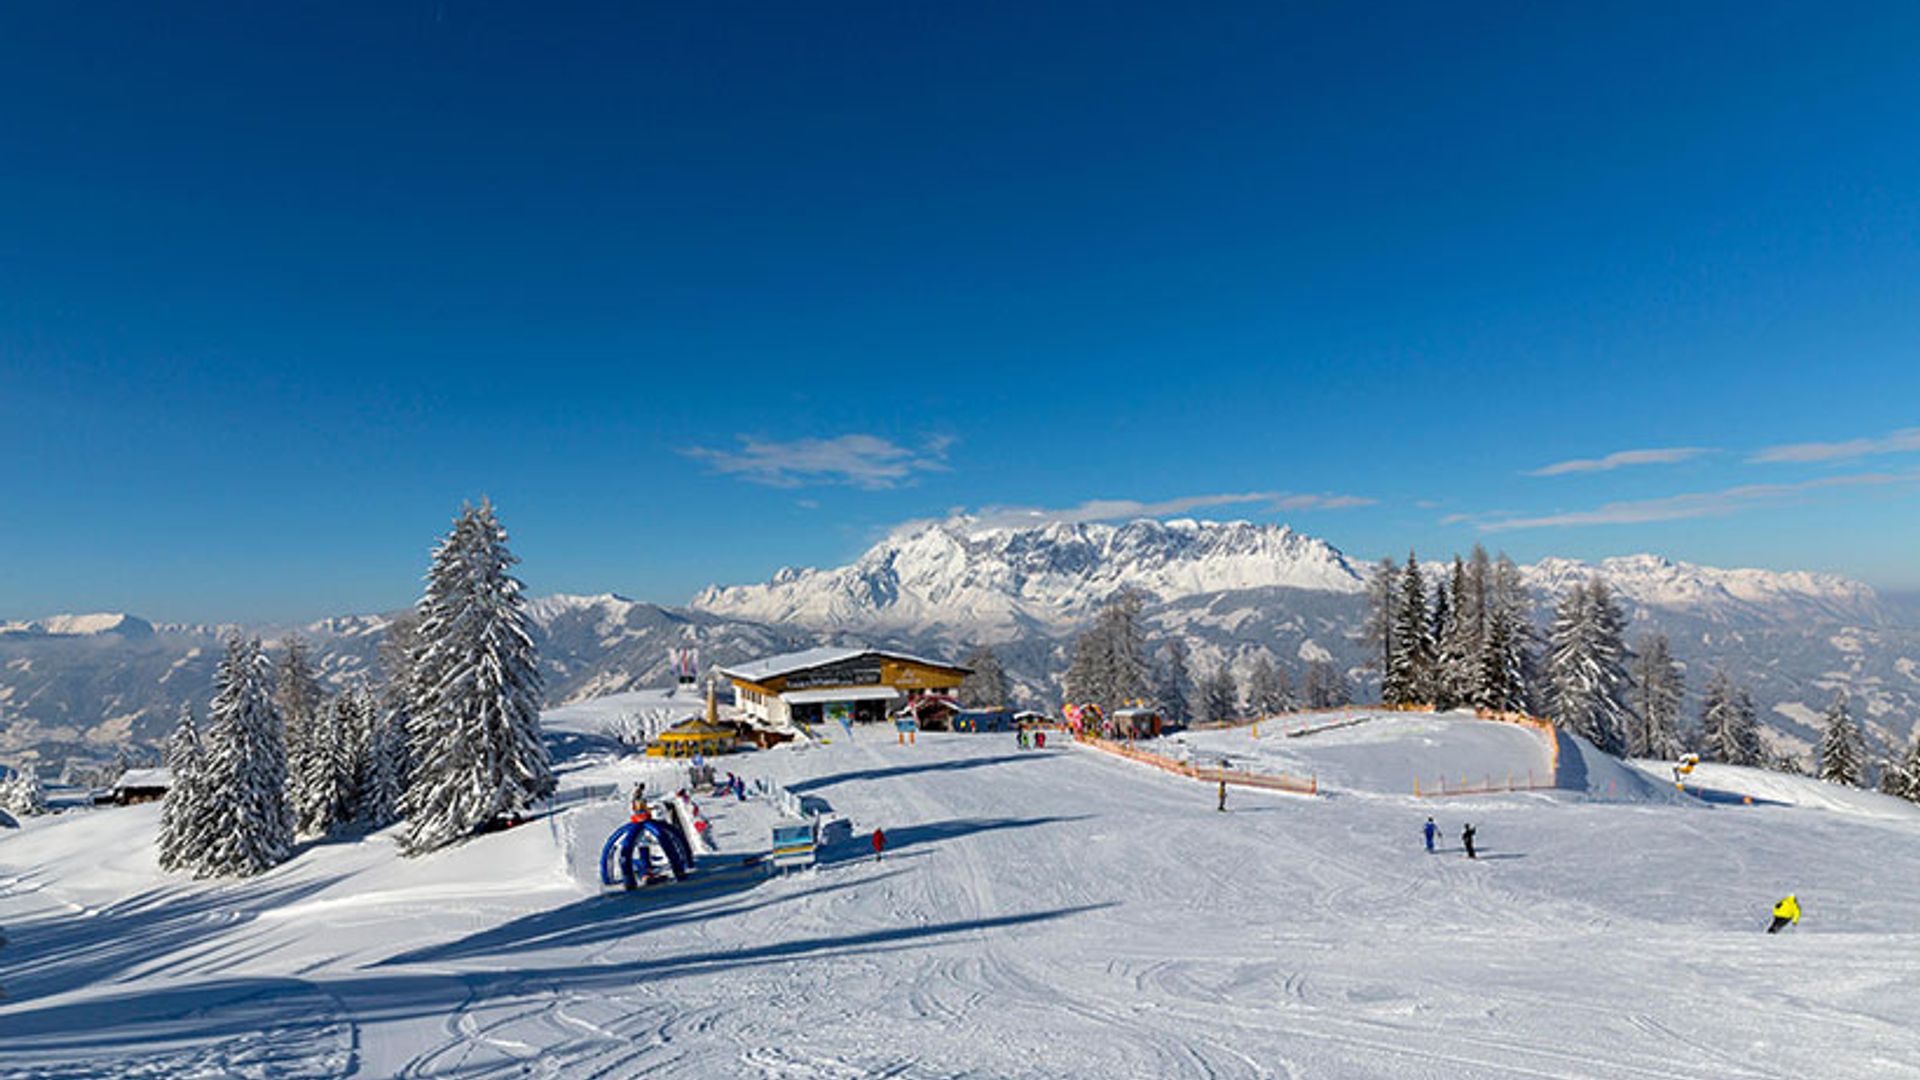 St Johann skiing resort